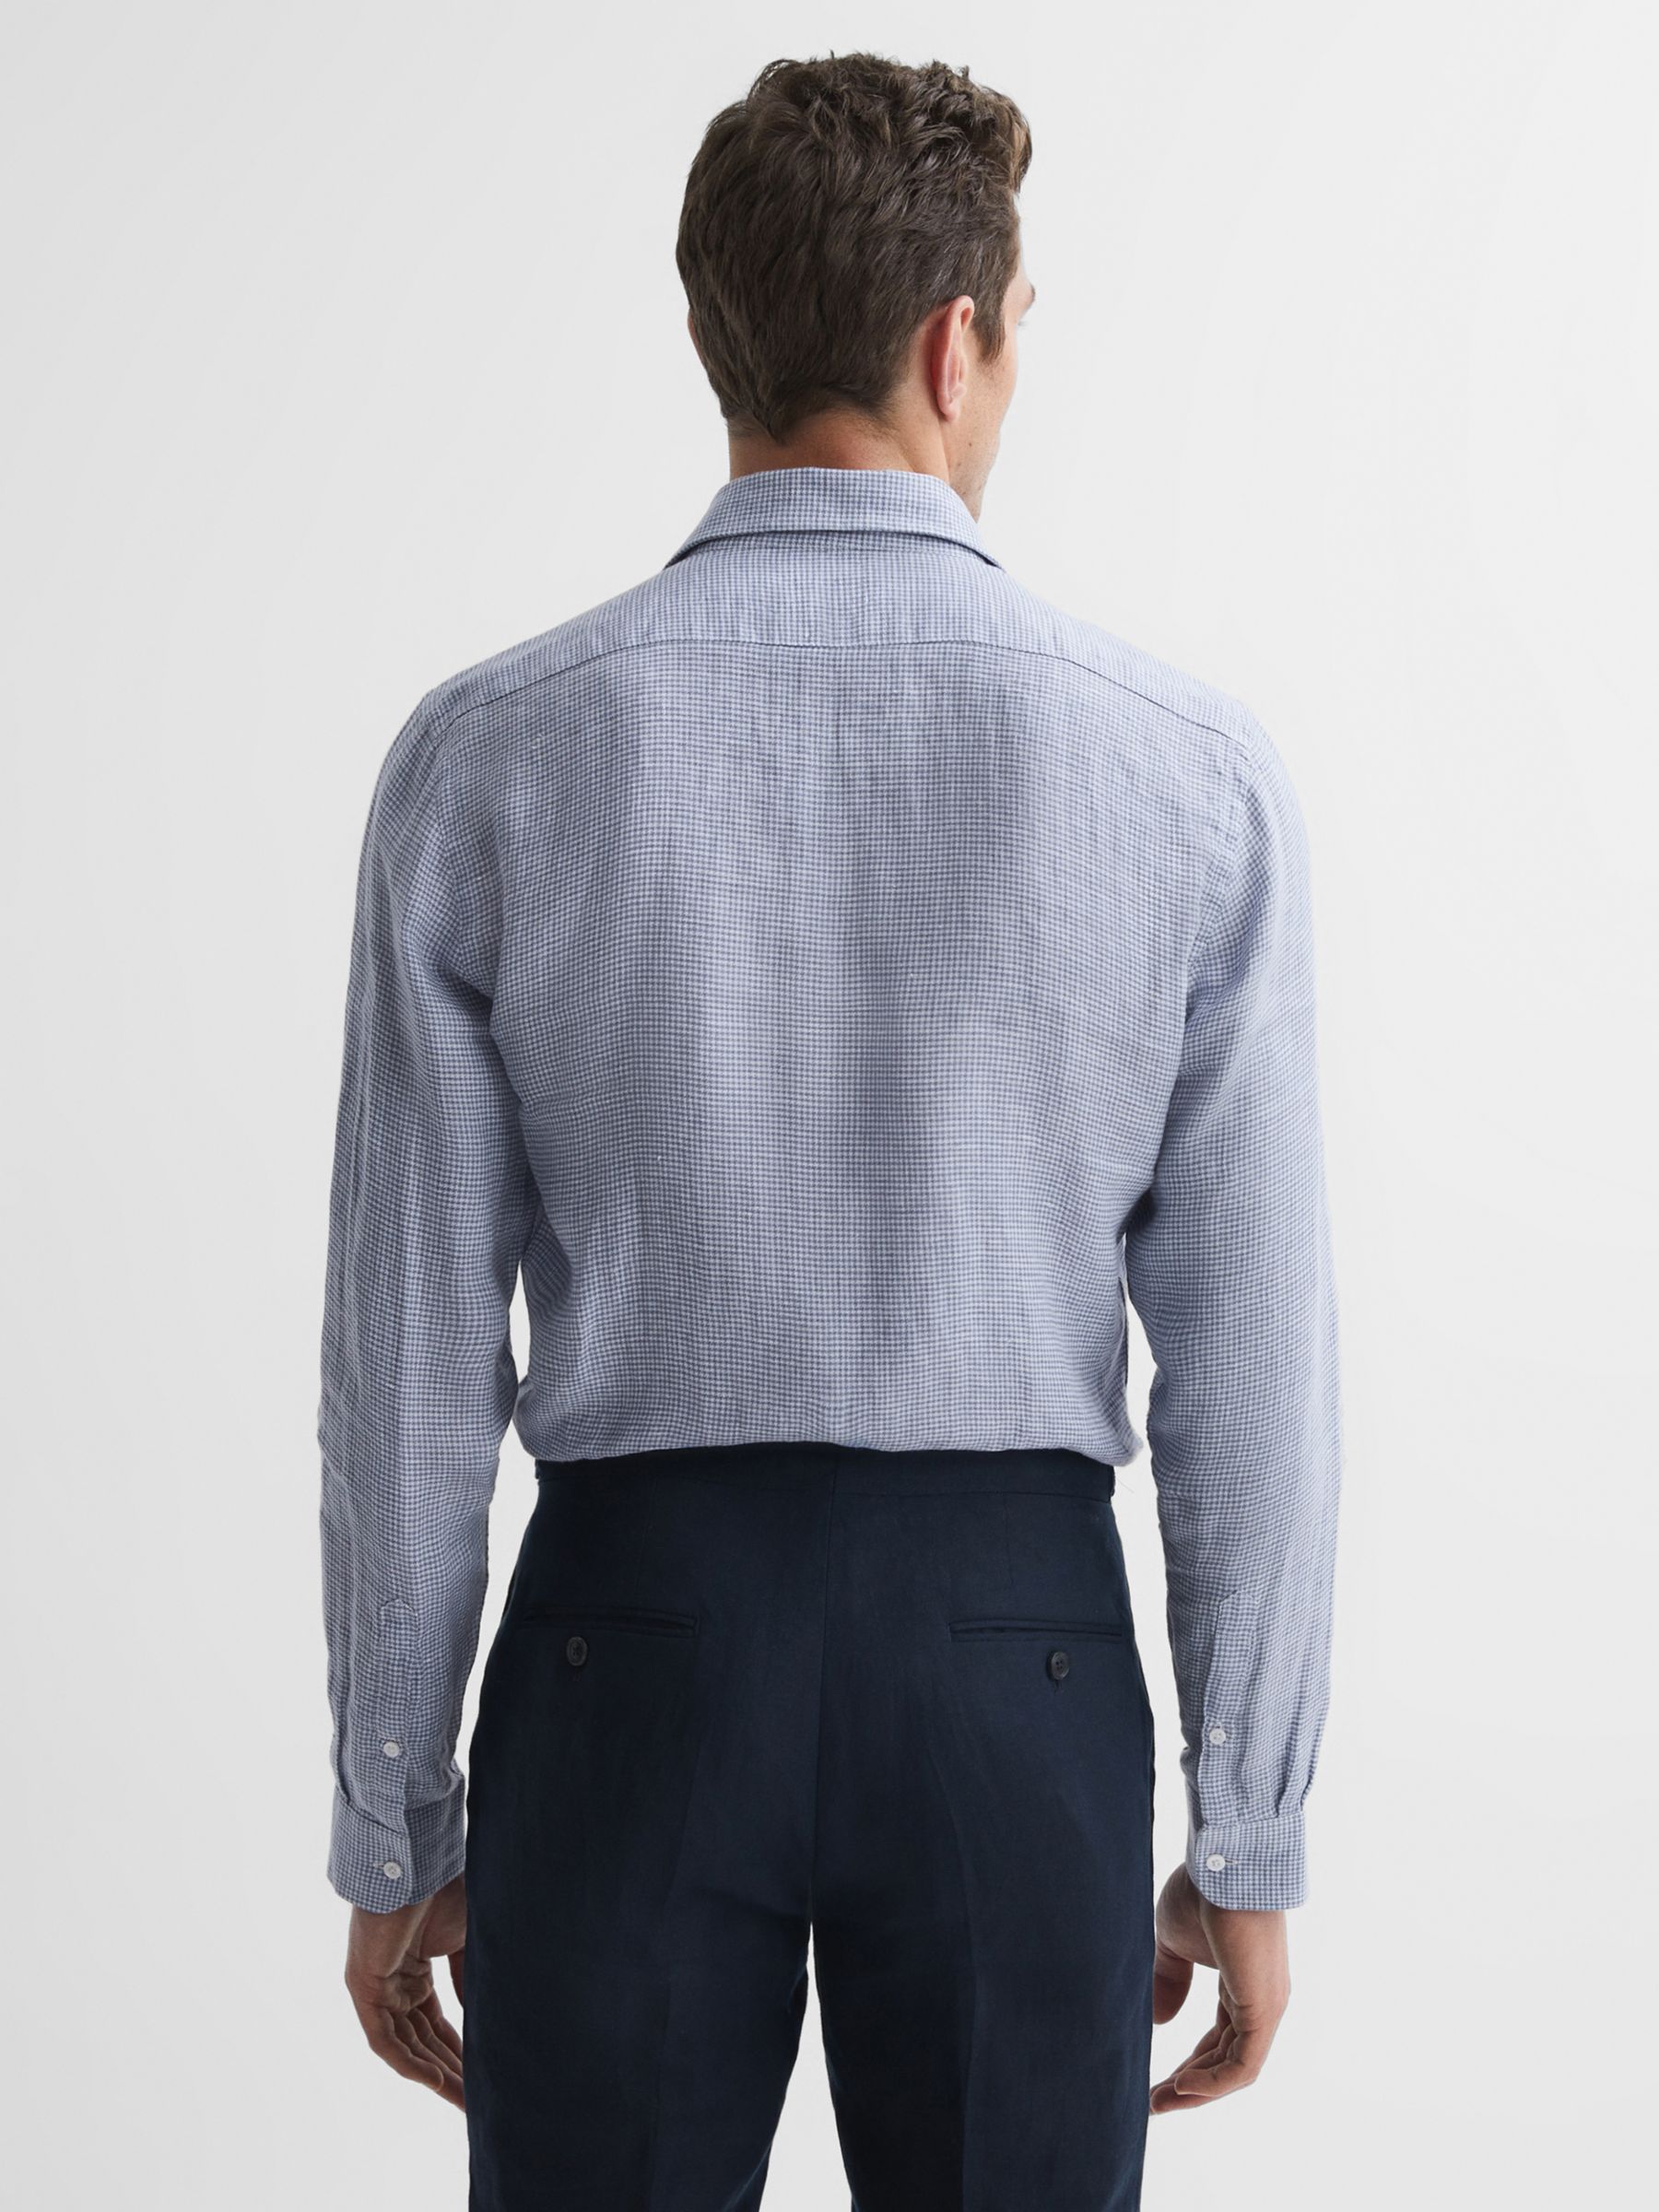 Buy Reiss Ruban Gingham Check Linen Shirt, Blue Online at johnlewis.com